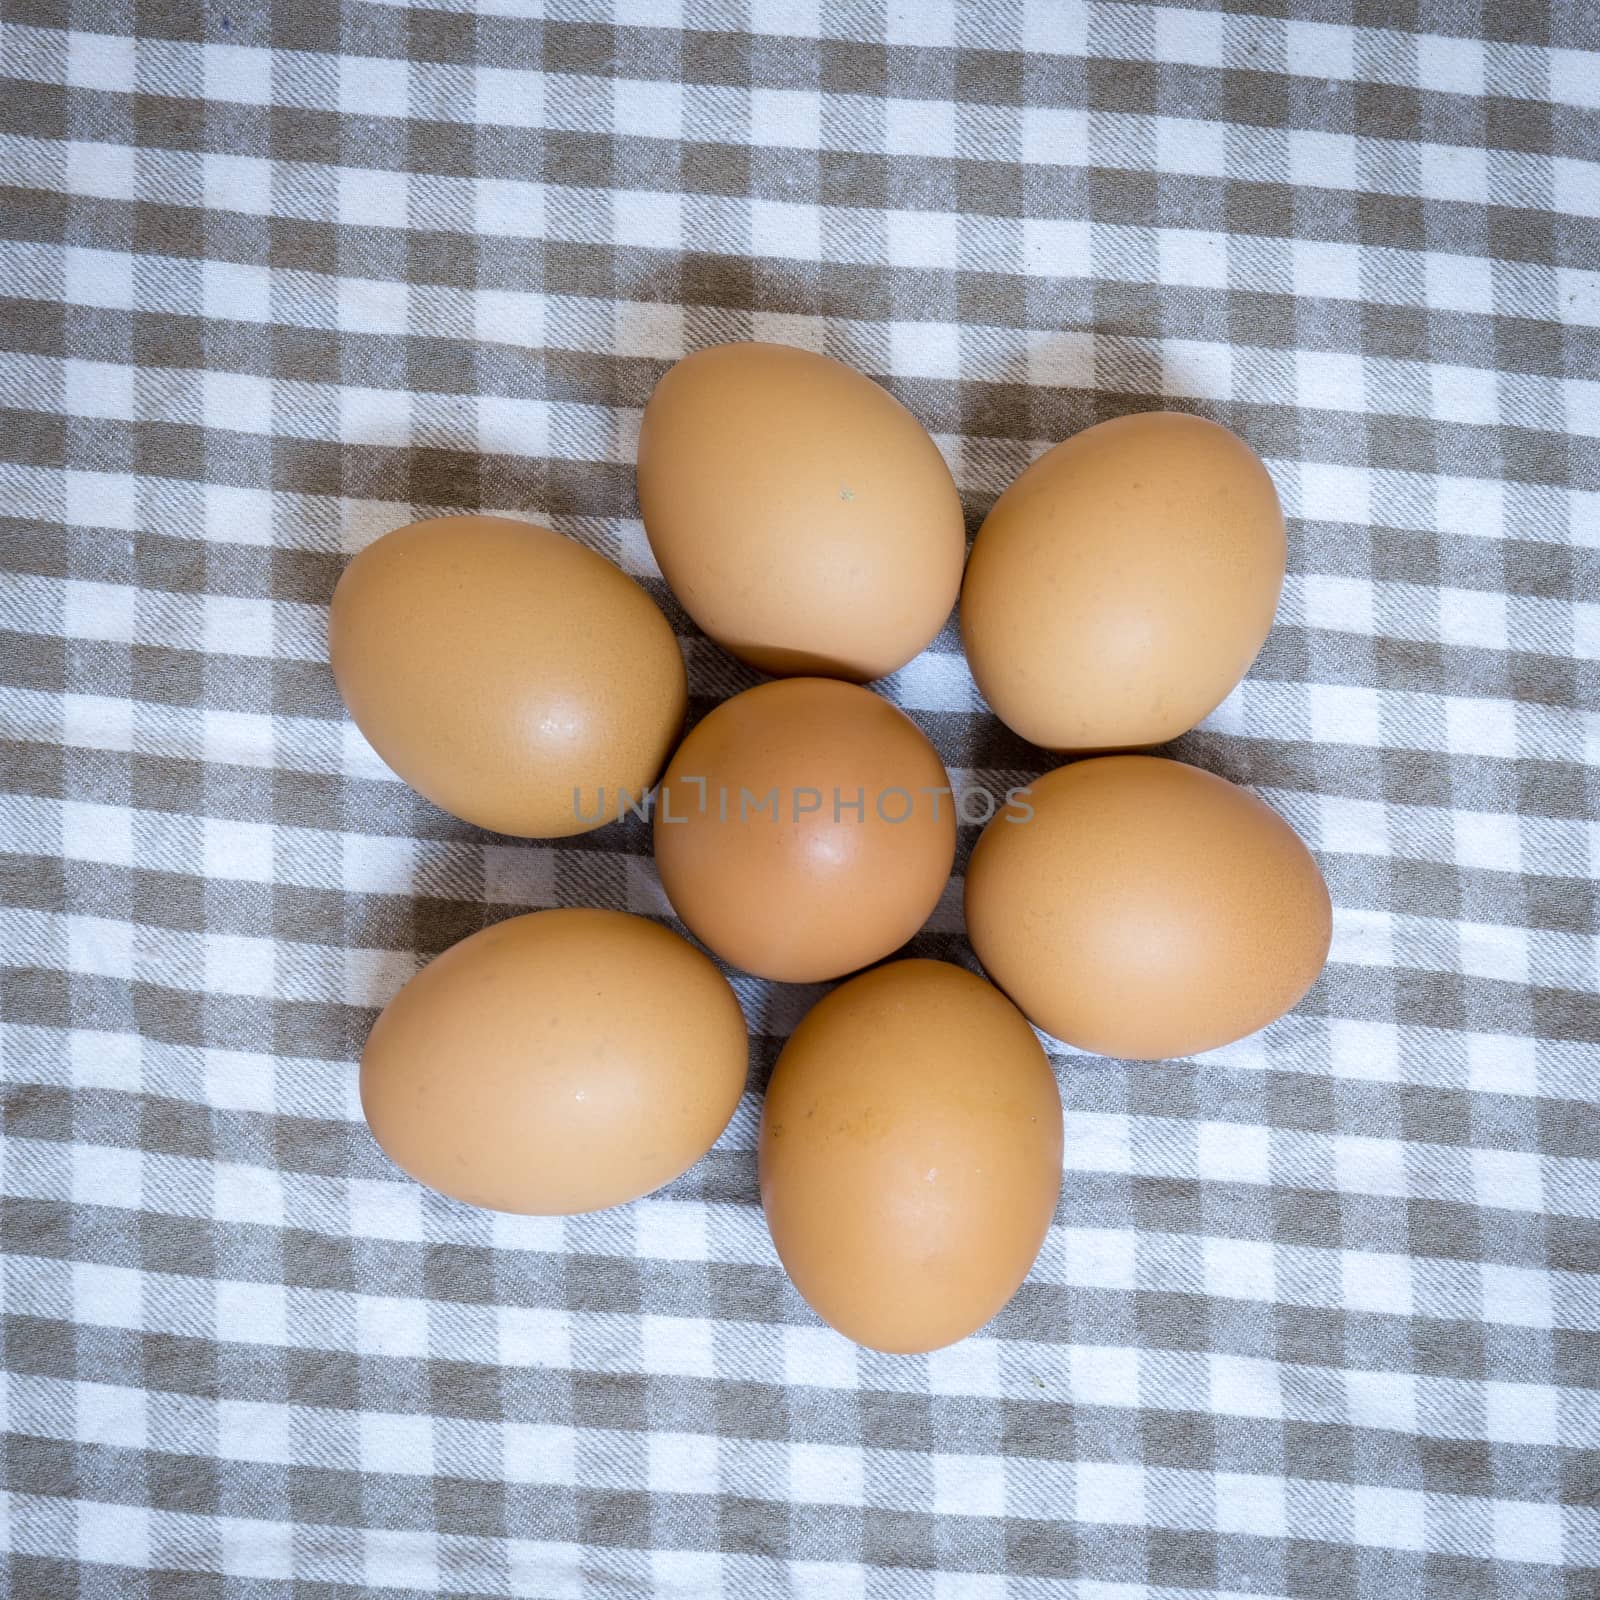 egg group on cloth plaid